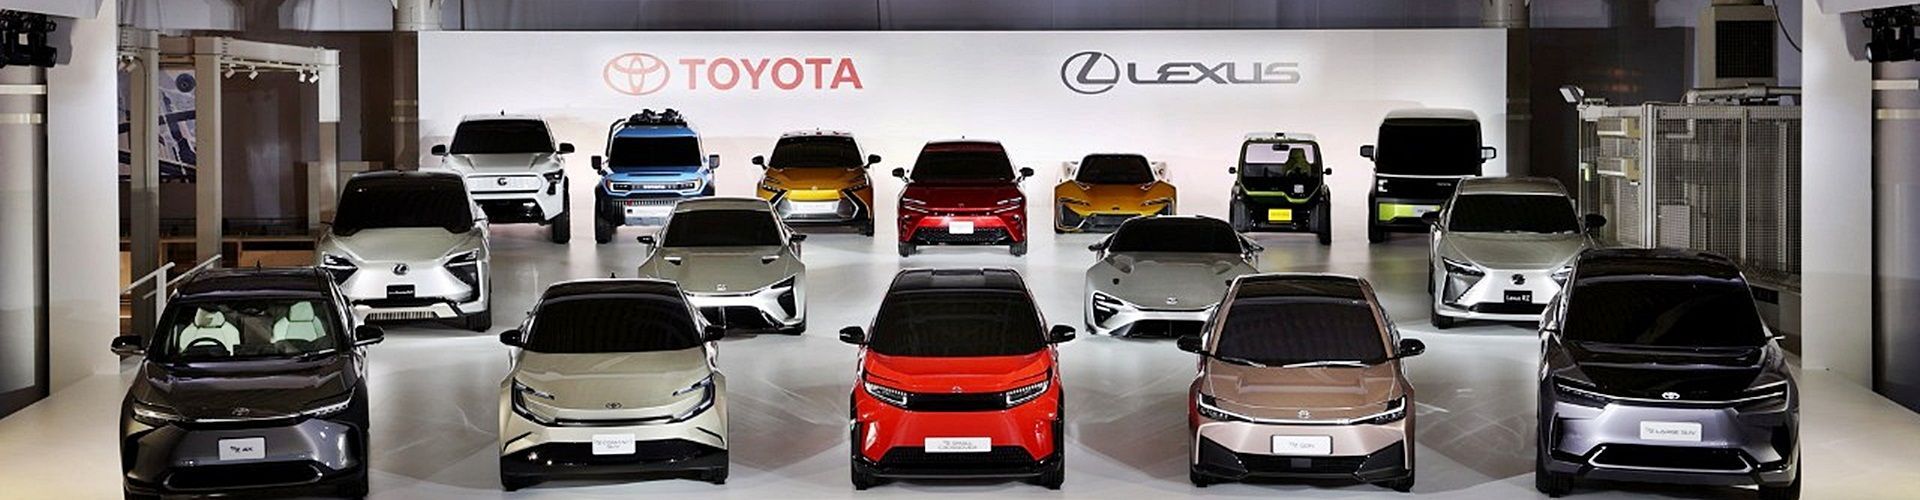 Lexus es de Toyota